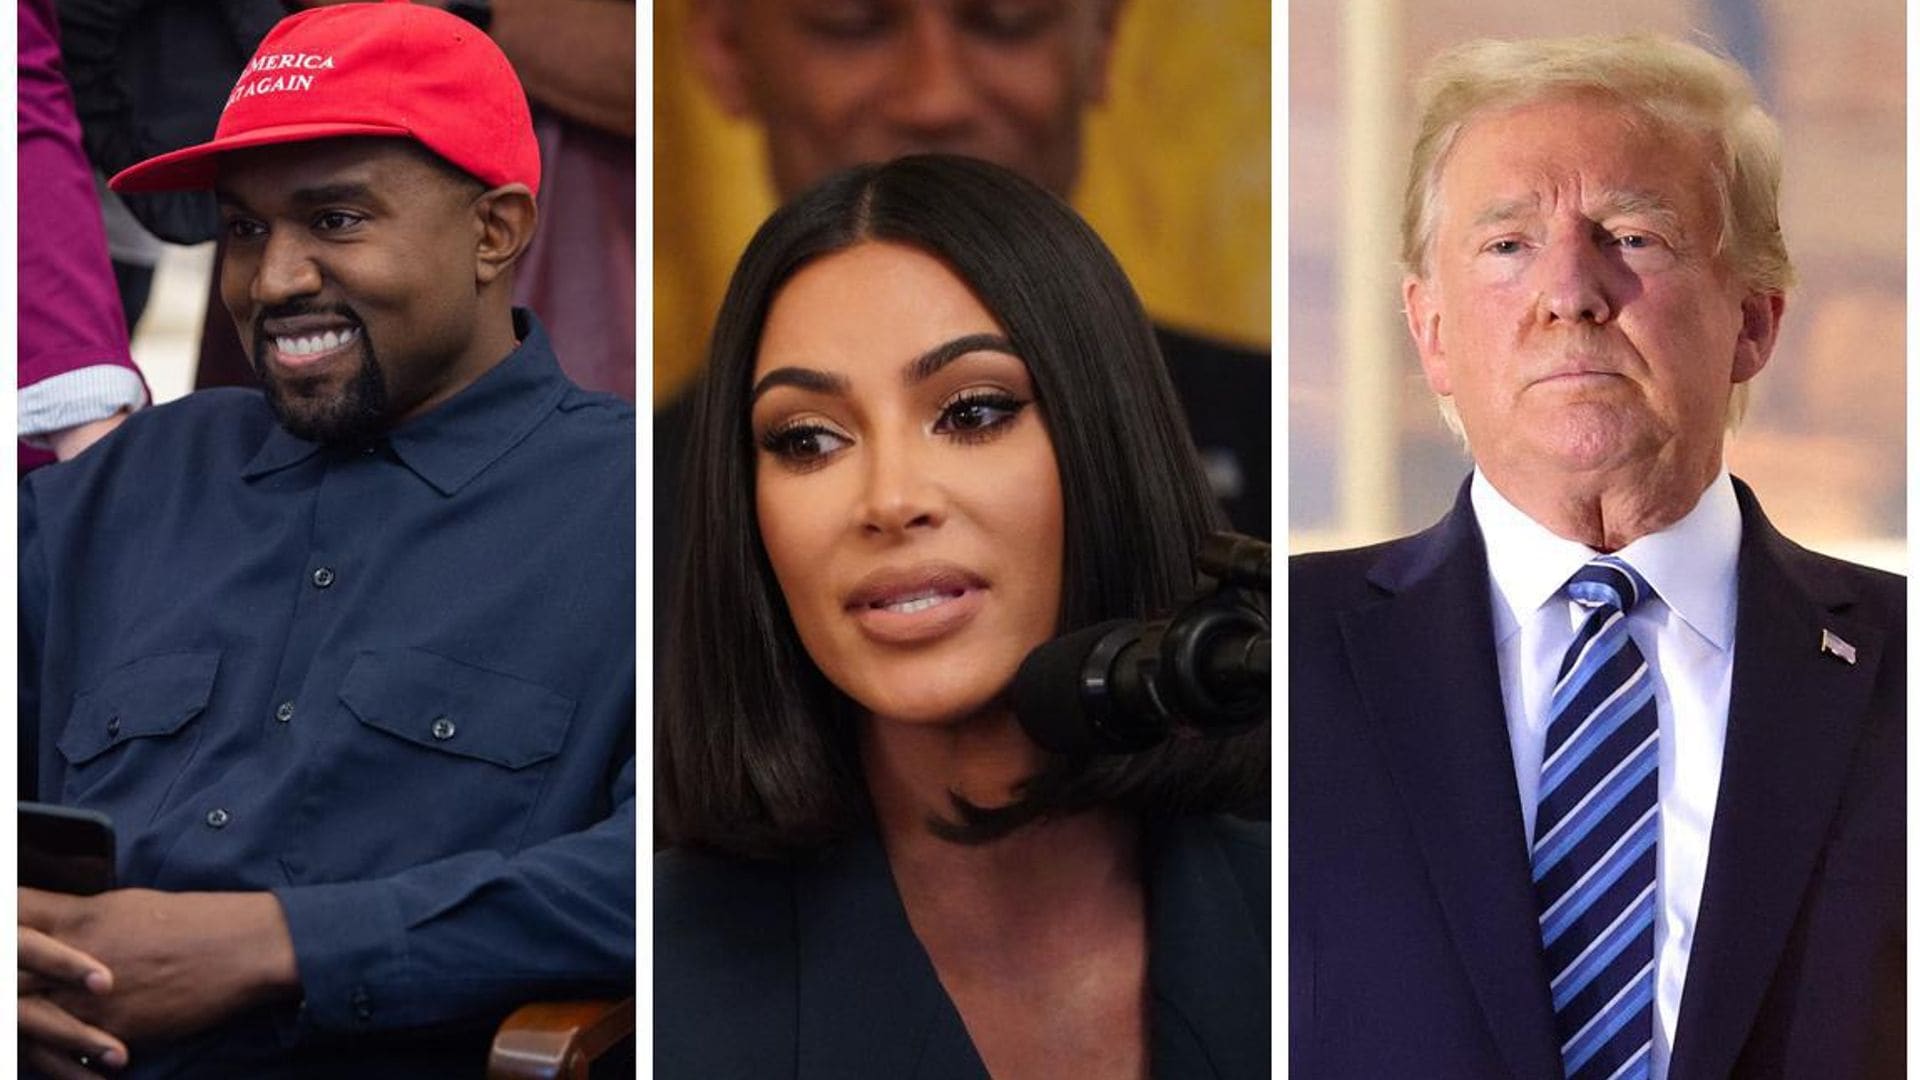 Kim Kardashian, Kanye West, Donald Trump